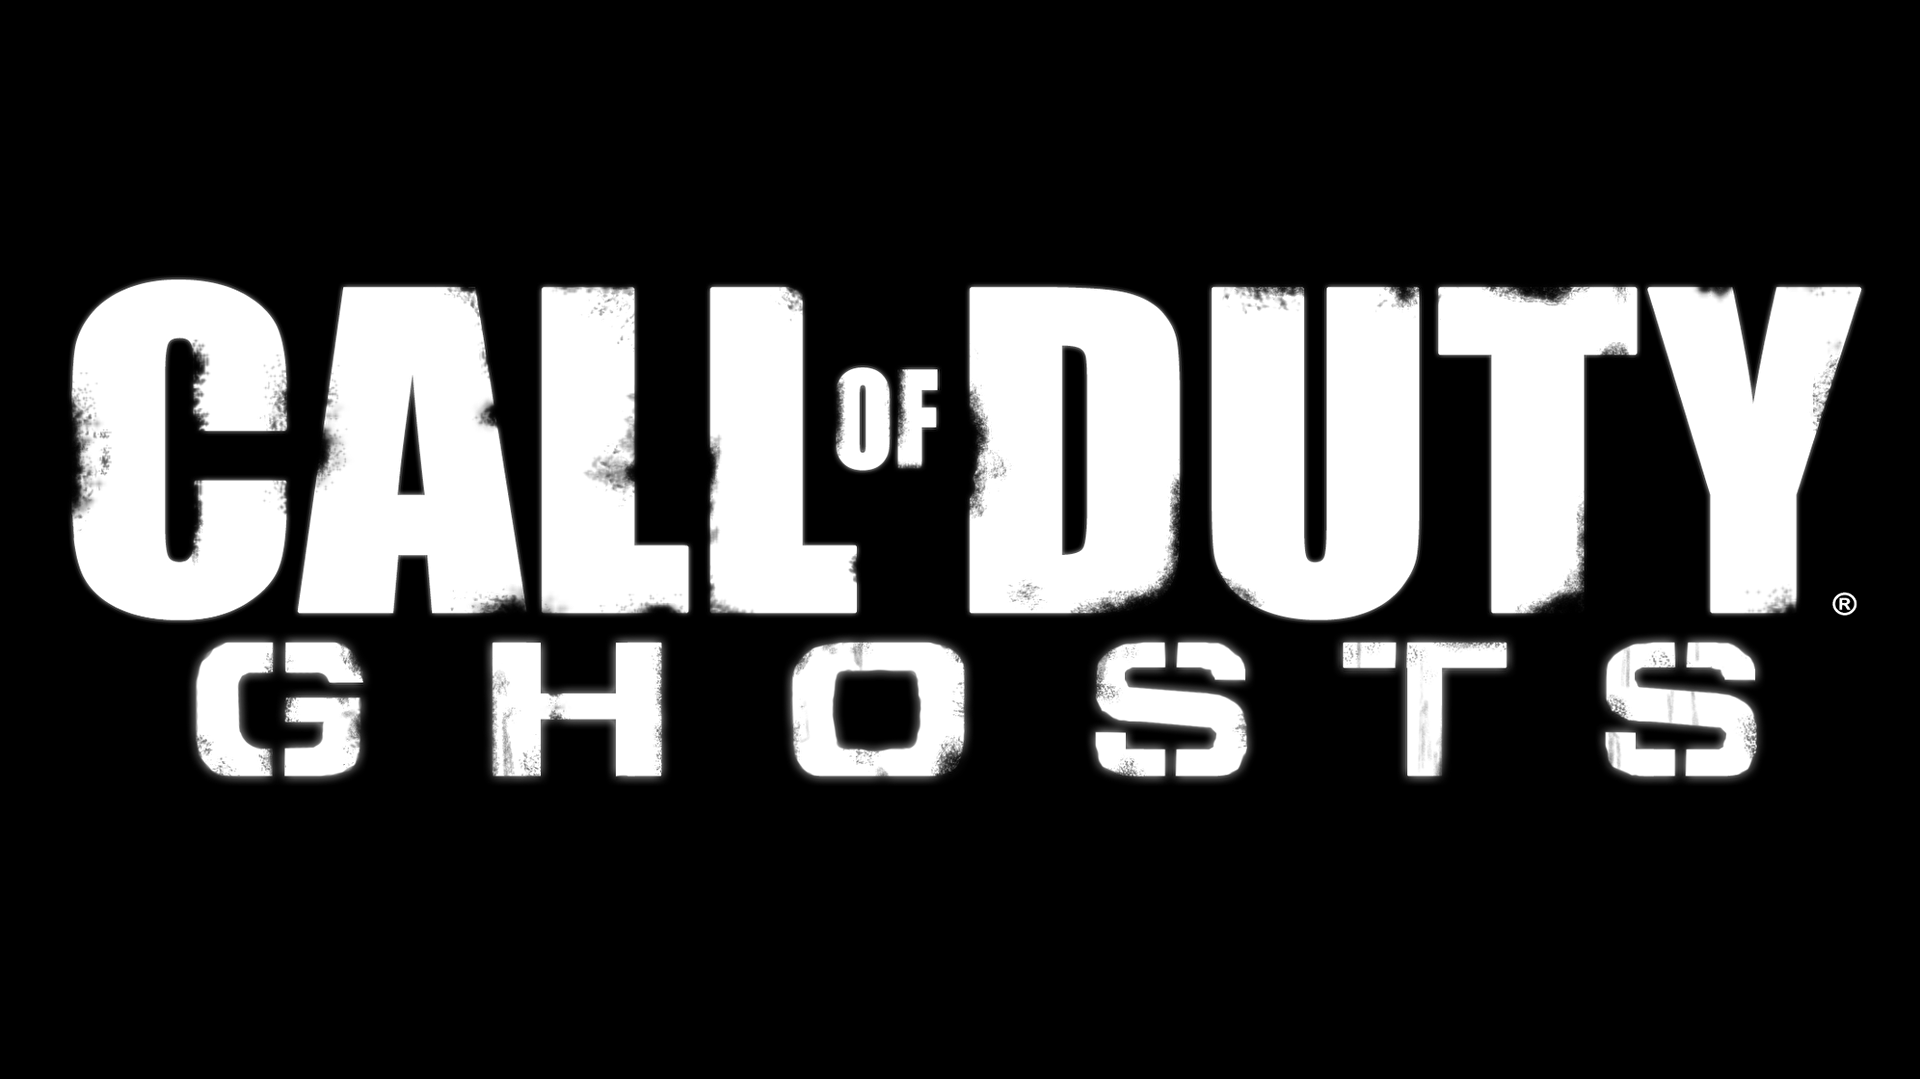 Call of Duty: Ghosts - Nintendo Wii U, Nintendo Wii U